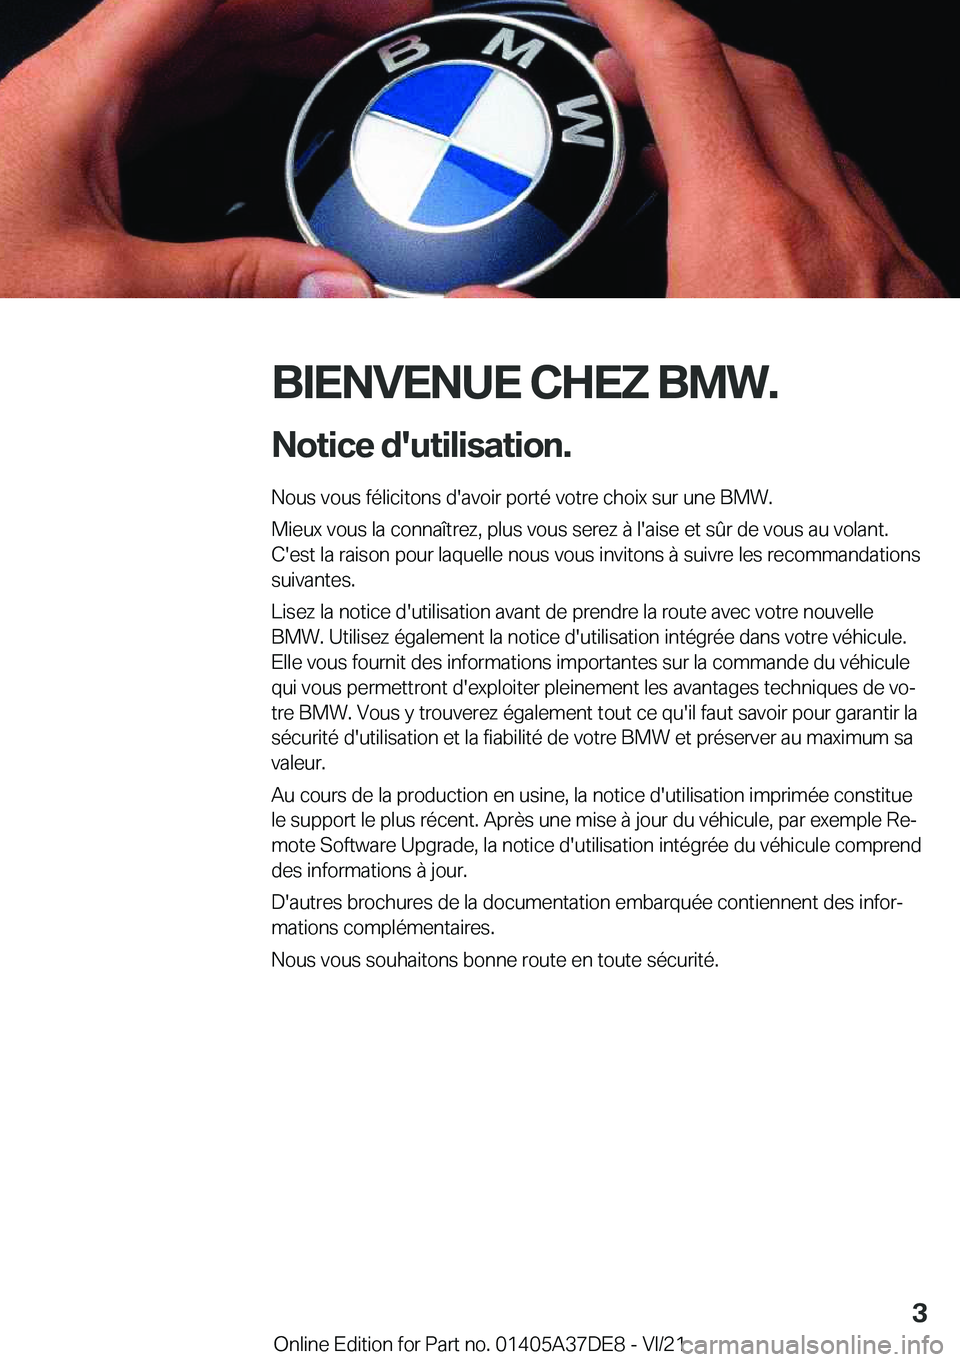 BMW M8 GRAN COUPE 2022  Notices Demploi (in French) �B�I�E�N�V�E�N�U�E��C�H�E�Z��B�M�W�.�N�o�t�i�c�e��d�'�u�t�i�l�i�s�a�t�i�o�n�.
�N�o�u�s��v�o�u�s��f�é�l�i�c�i�t�o�n�s��d�'�a�v�o�i�r��p�o�r�t�é��v�o�t�r�e��c�h�o�i�x��s�u�r��u�n�e�